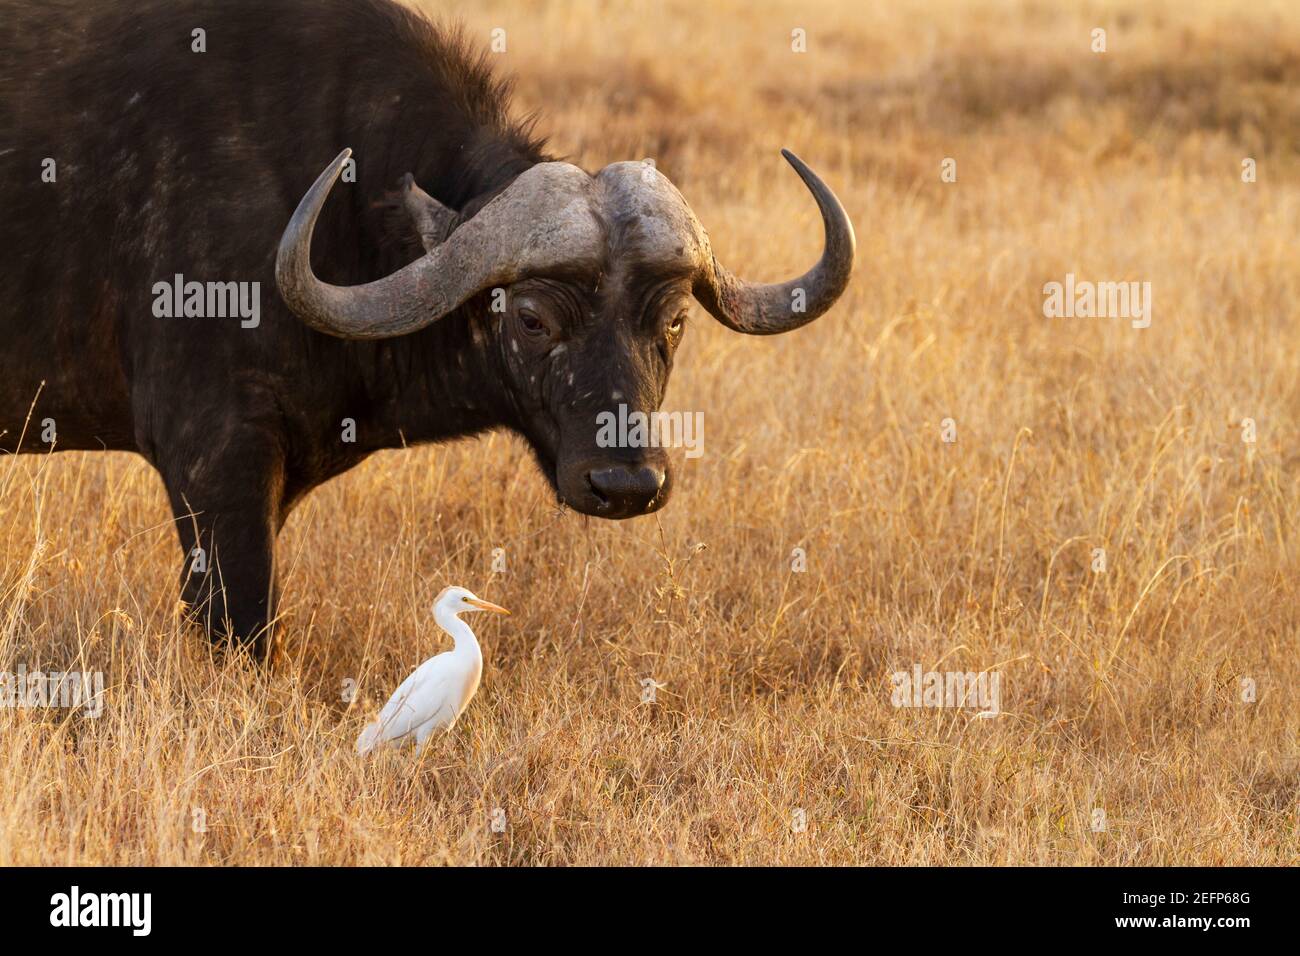 El búfalo de cabo (Syncerus caffer) da un aspecto gracioso de ojo lateral al ave de garza blanca del ganado. Reserva Nacional Maasai Mara, Kenia, África Foto de stock